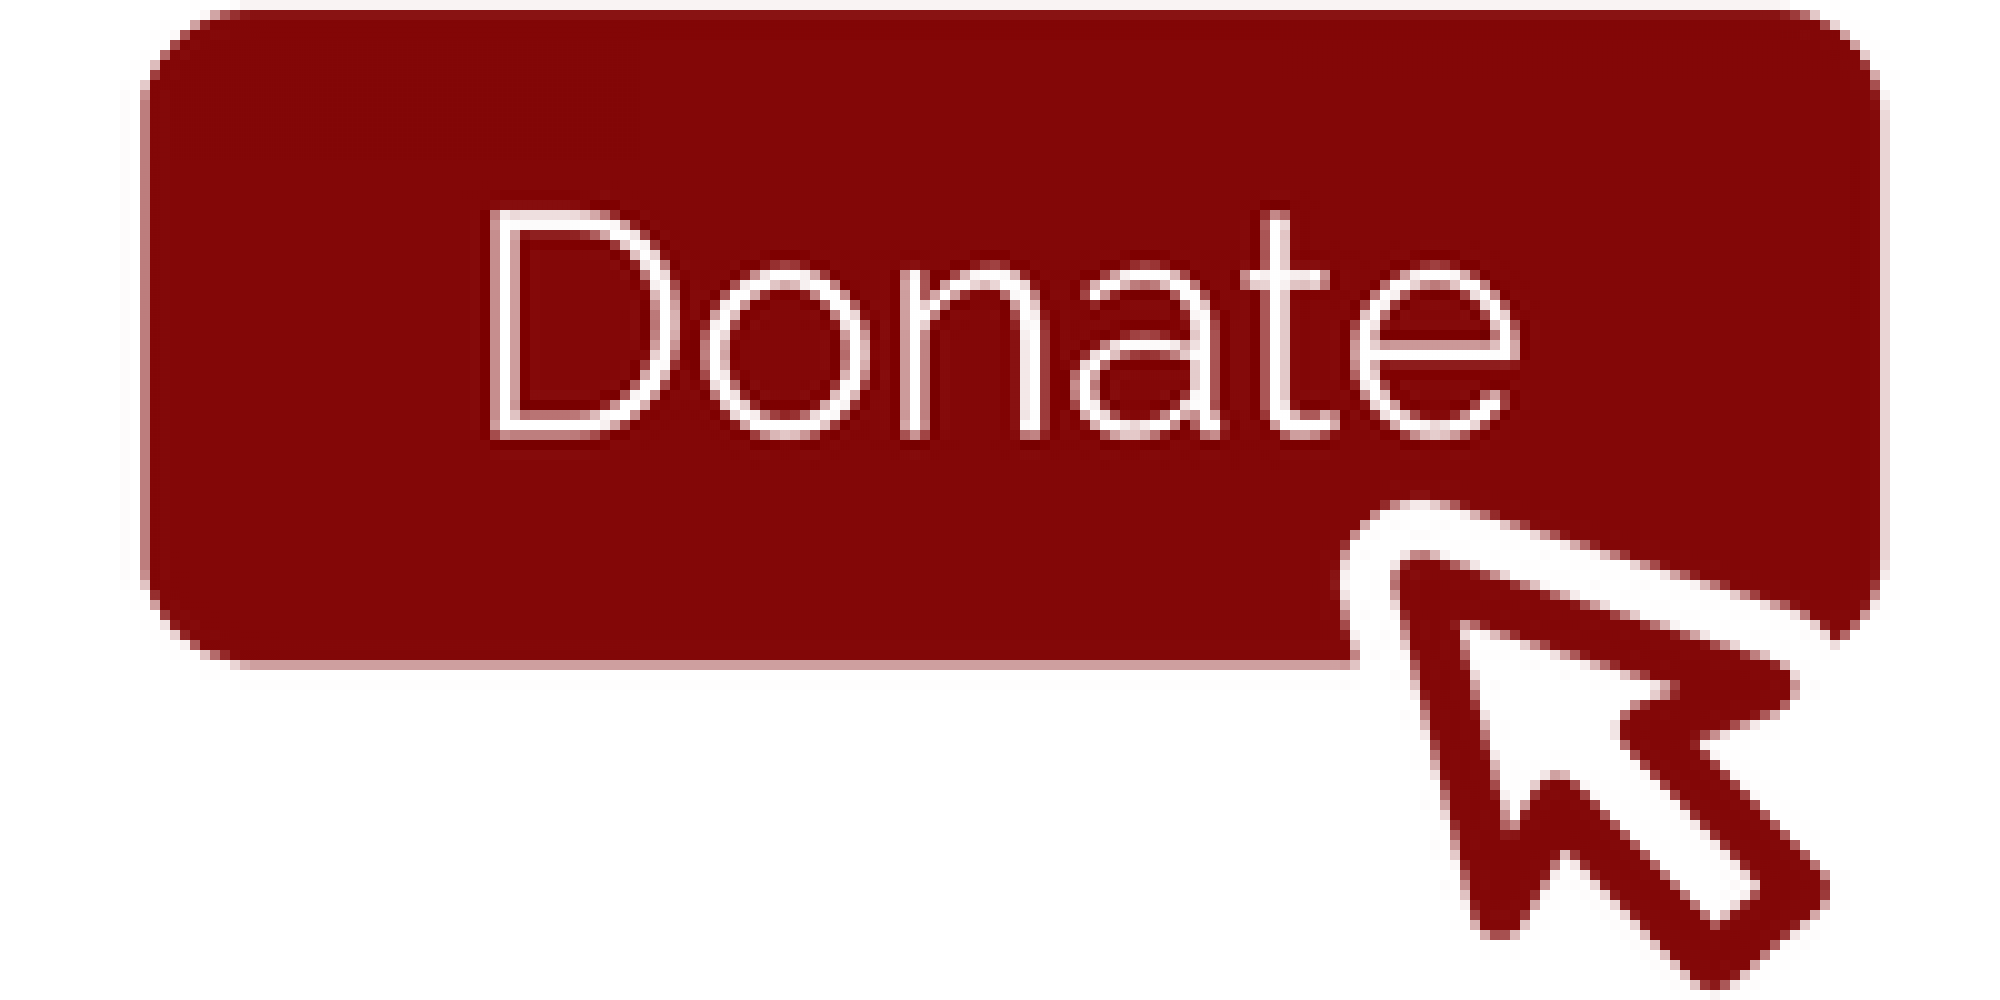 Donation Button